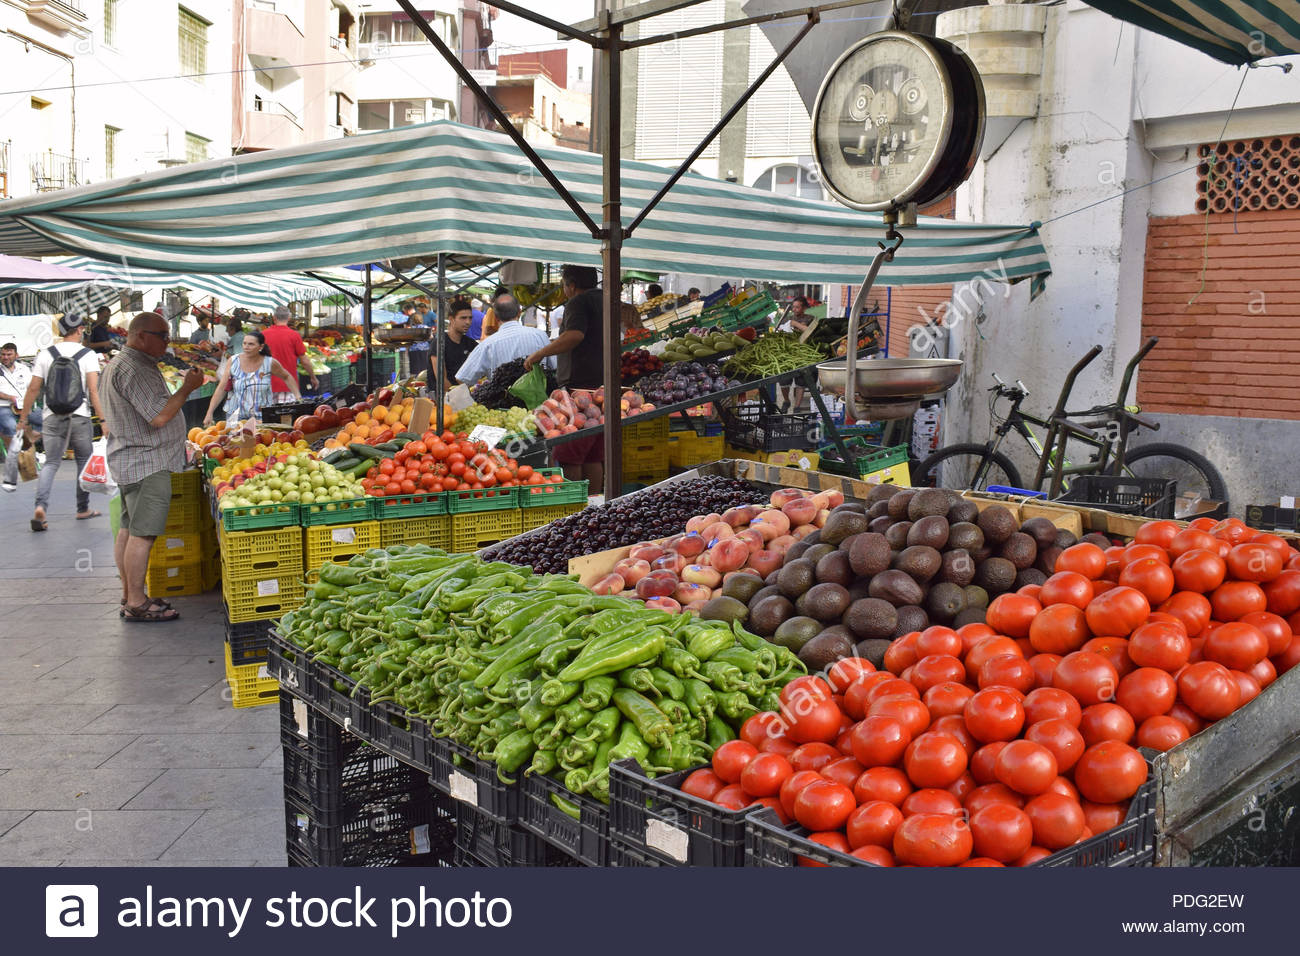 Mercado Ingeniero Torroja - street market with fruits and ...